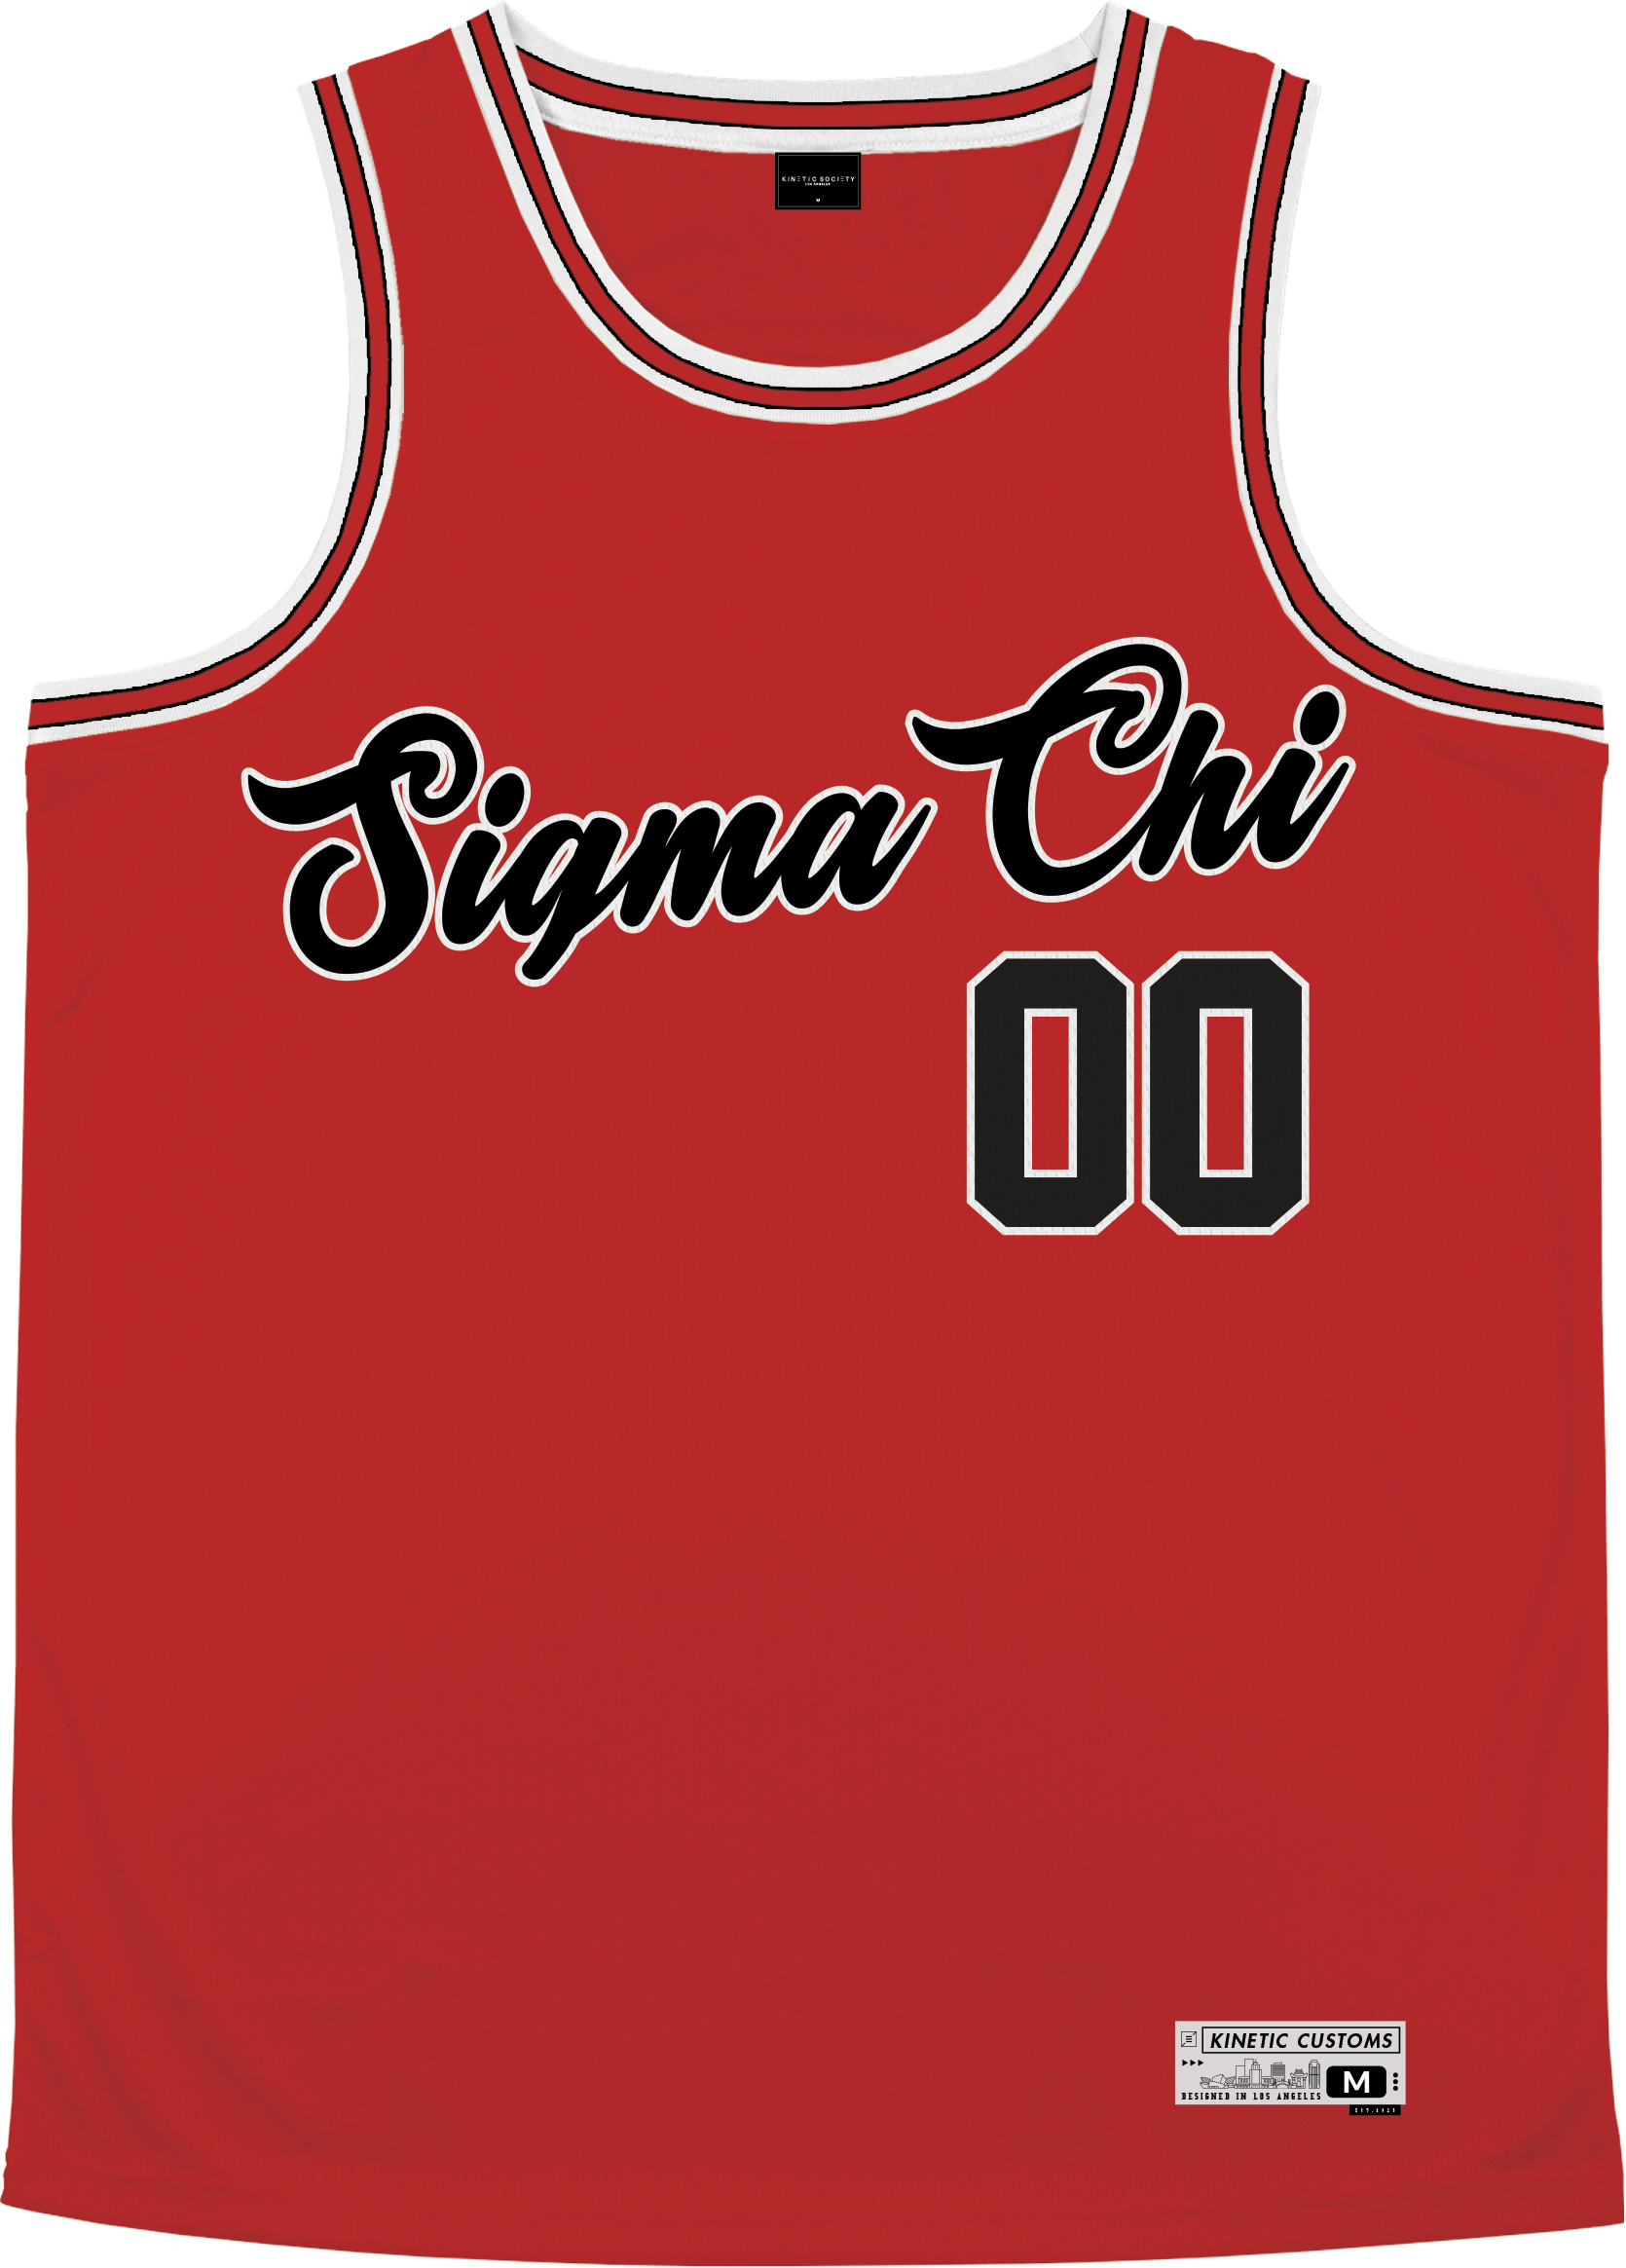 Sigma Chi - Big Red Basketball Jersey - Kinetic Society